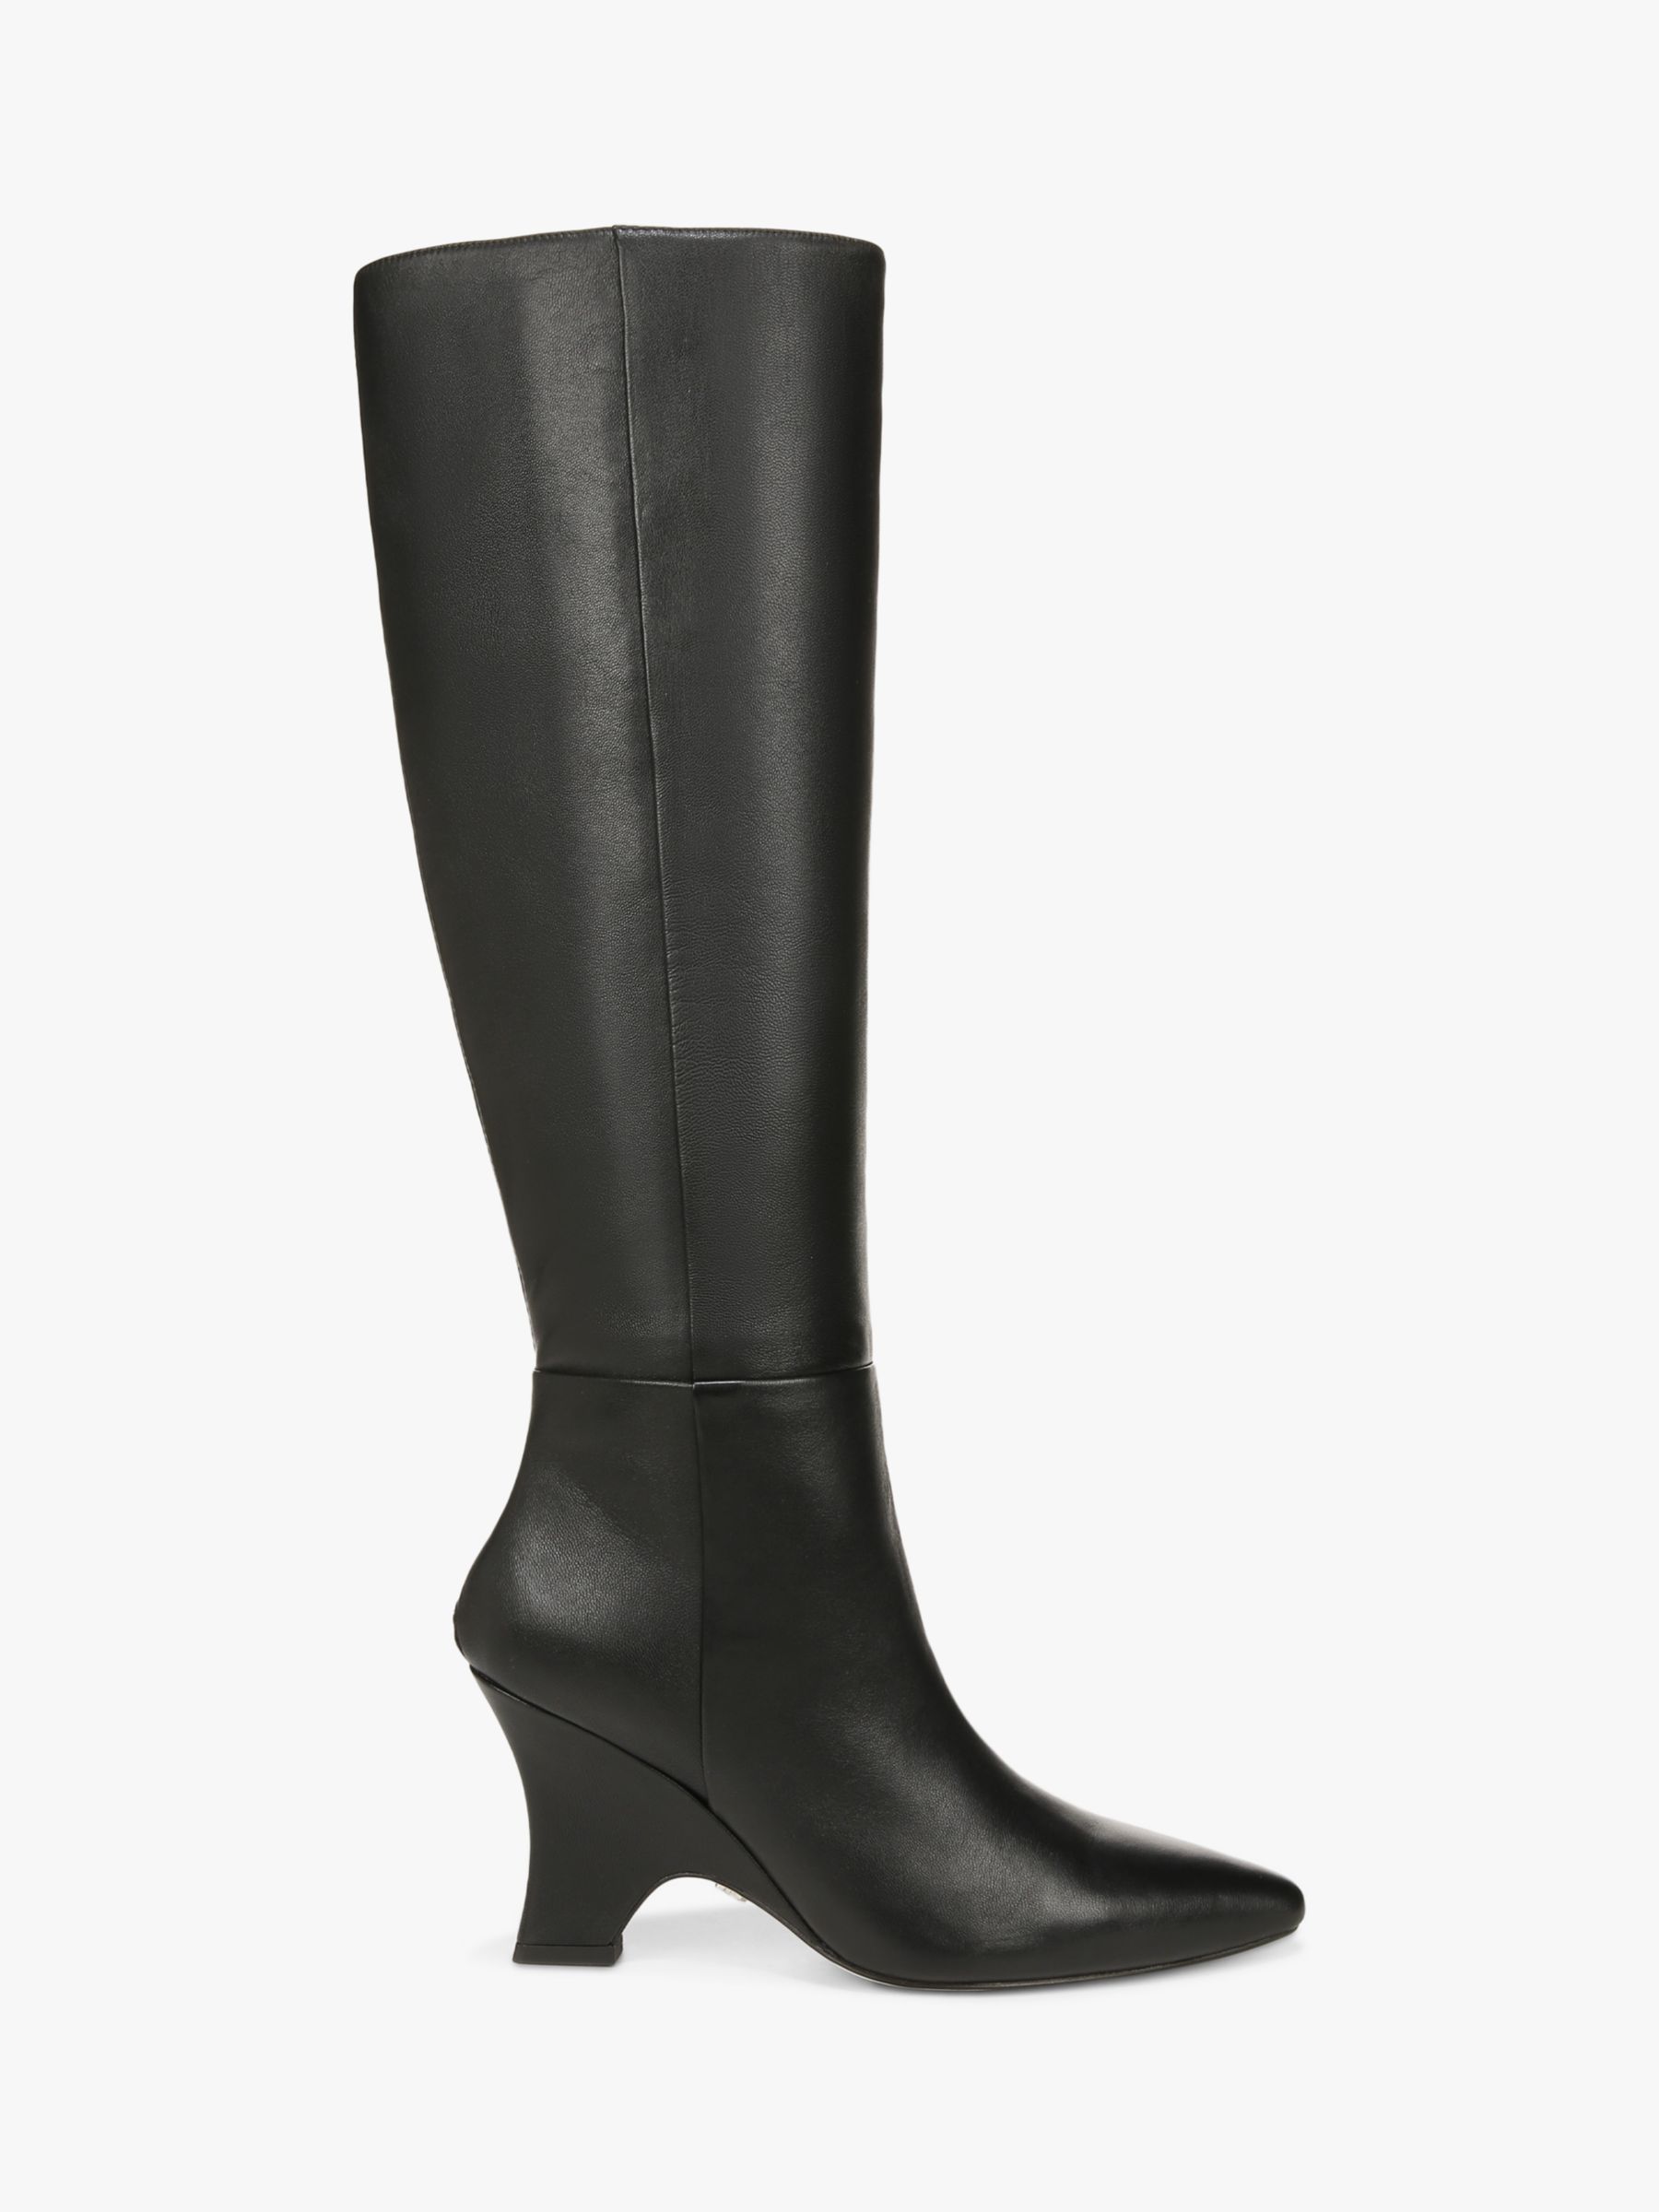 Sam Edelman Vance Knee High Leather Boots, Black, 6.5